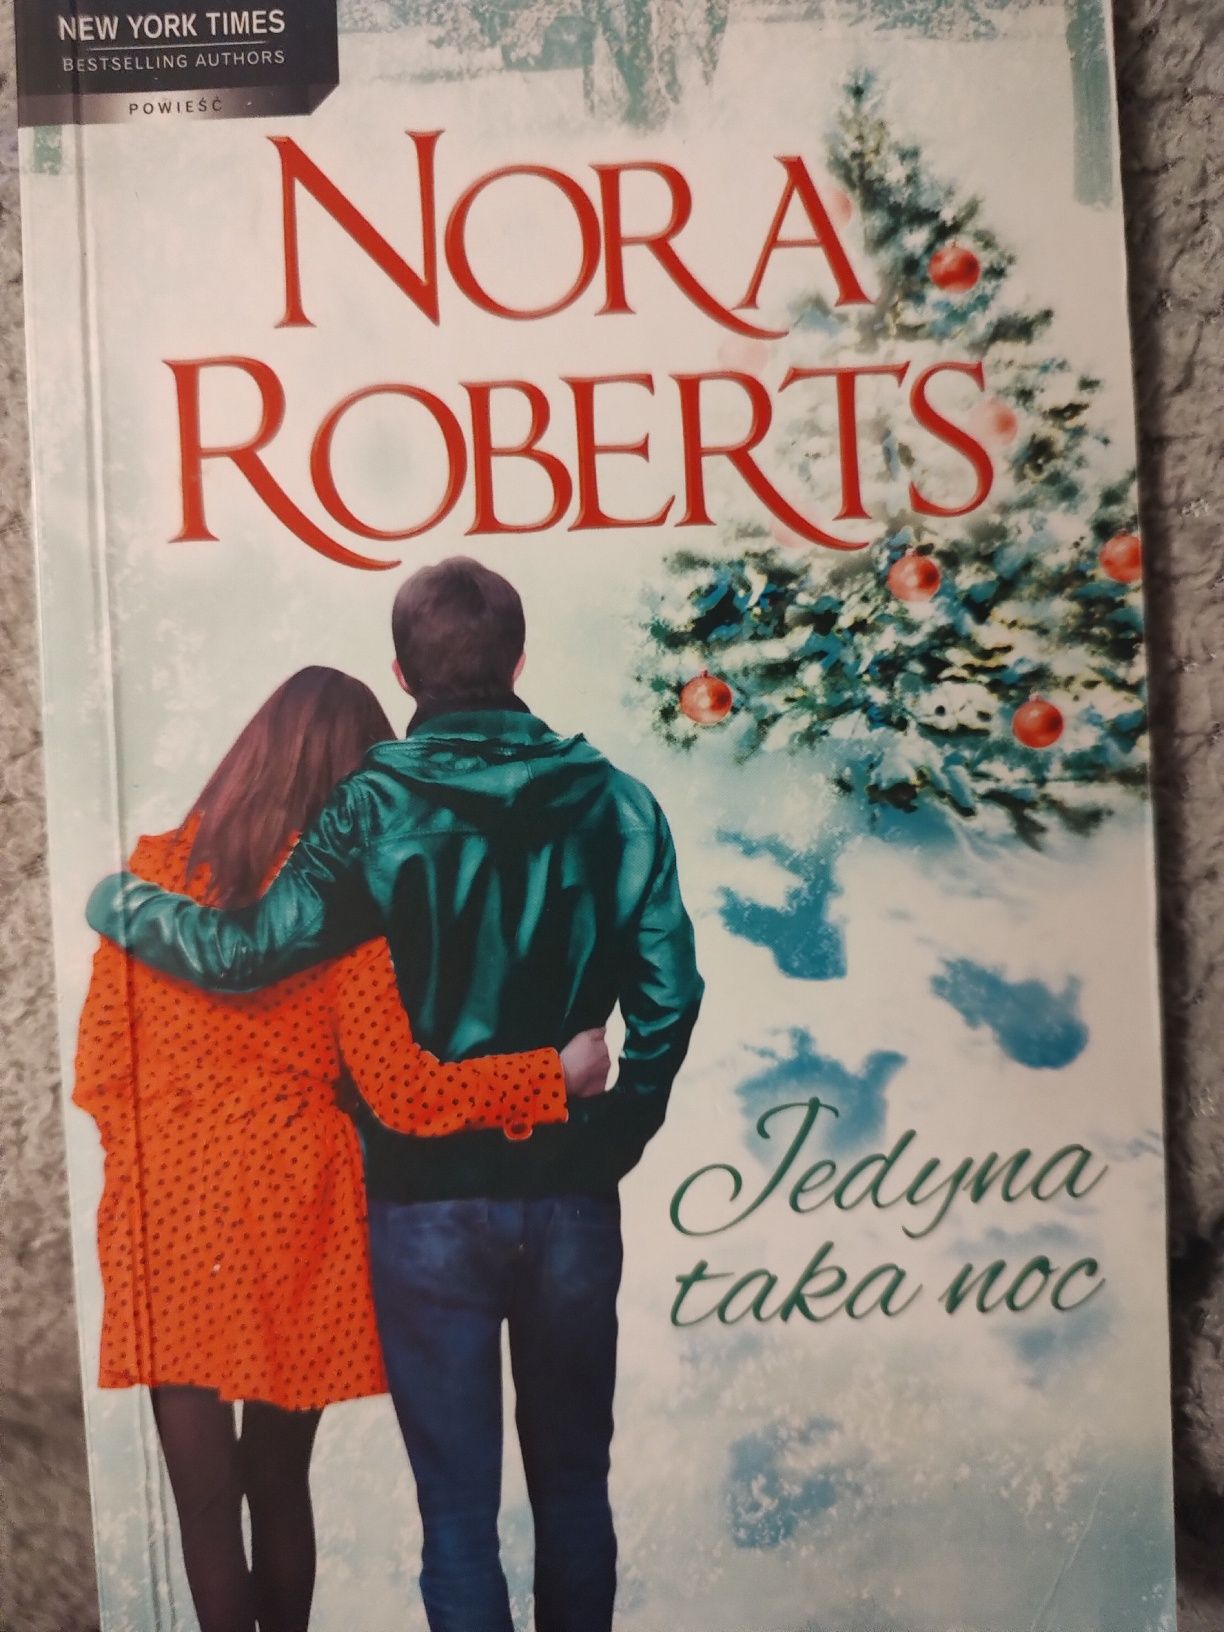 Książka Nora Roberts "Jedyna taka noc"